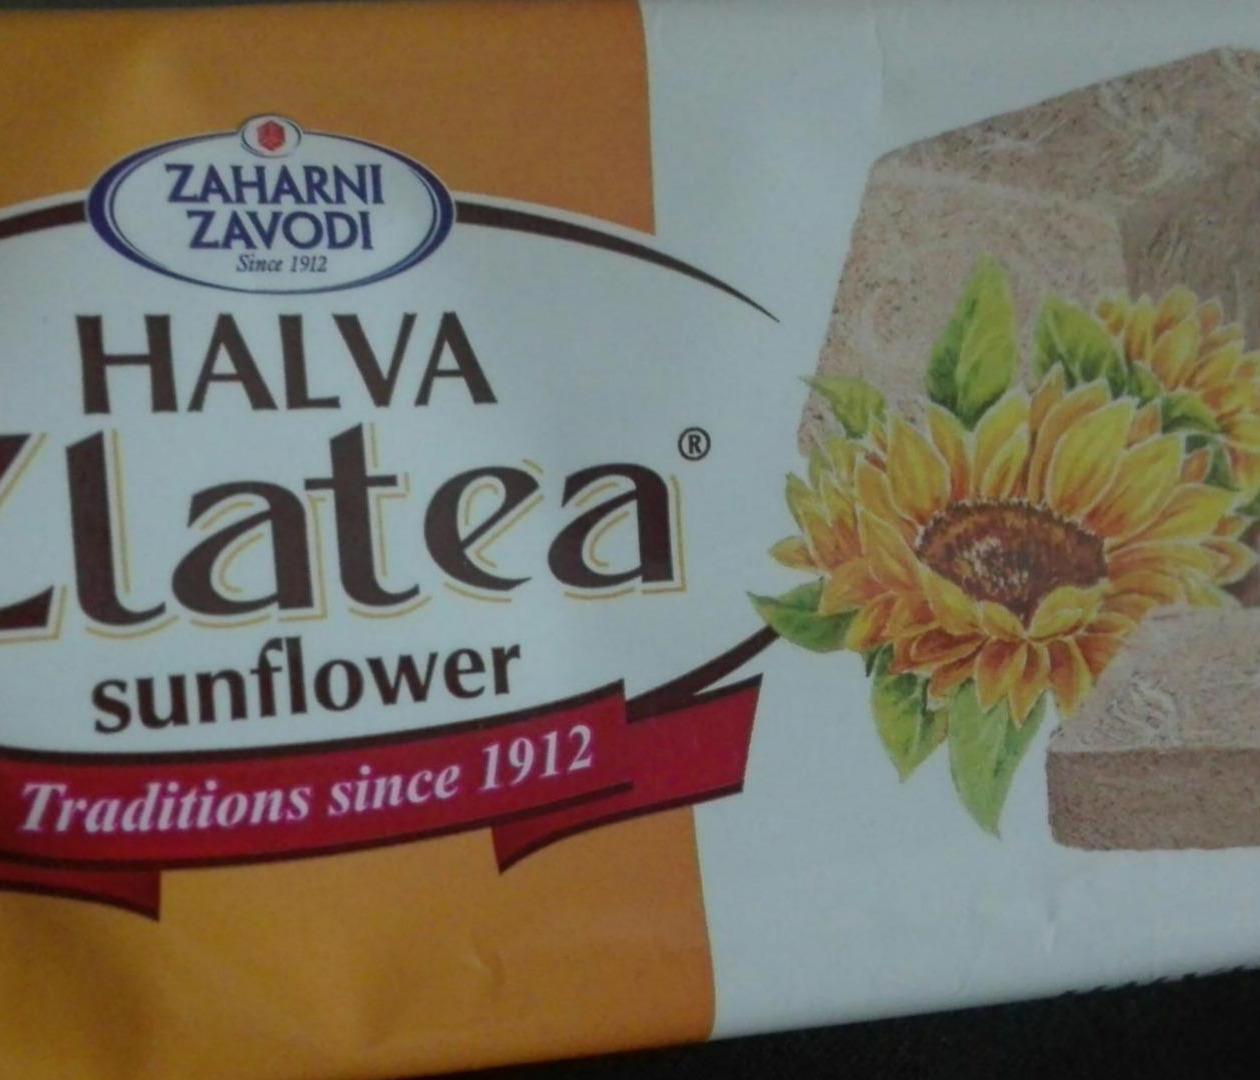 Zdjęcia - HALVA Zlatea sunflower Zaharni Zavodi